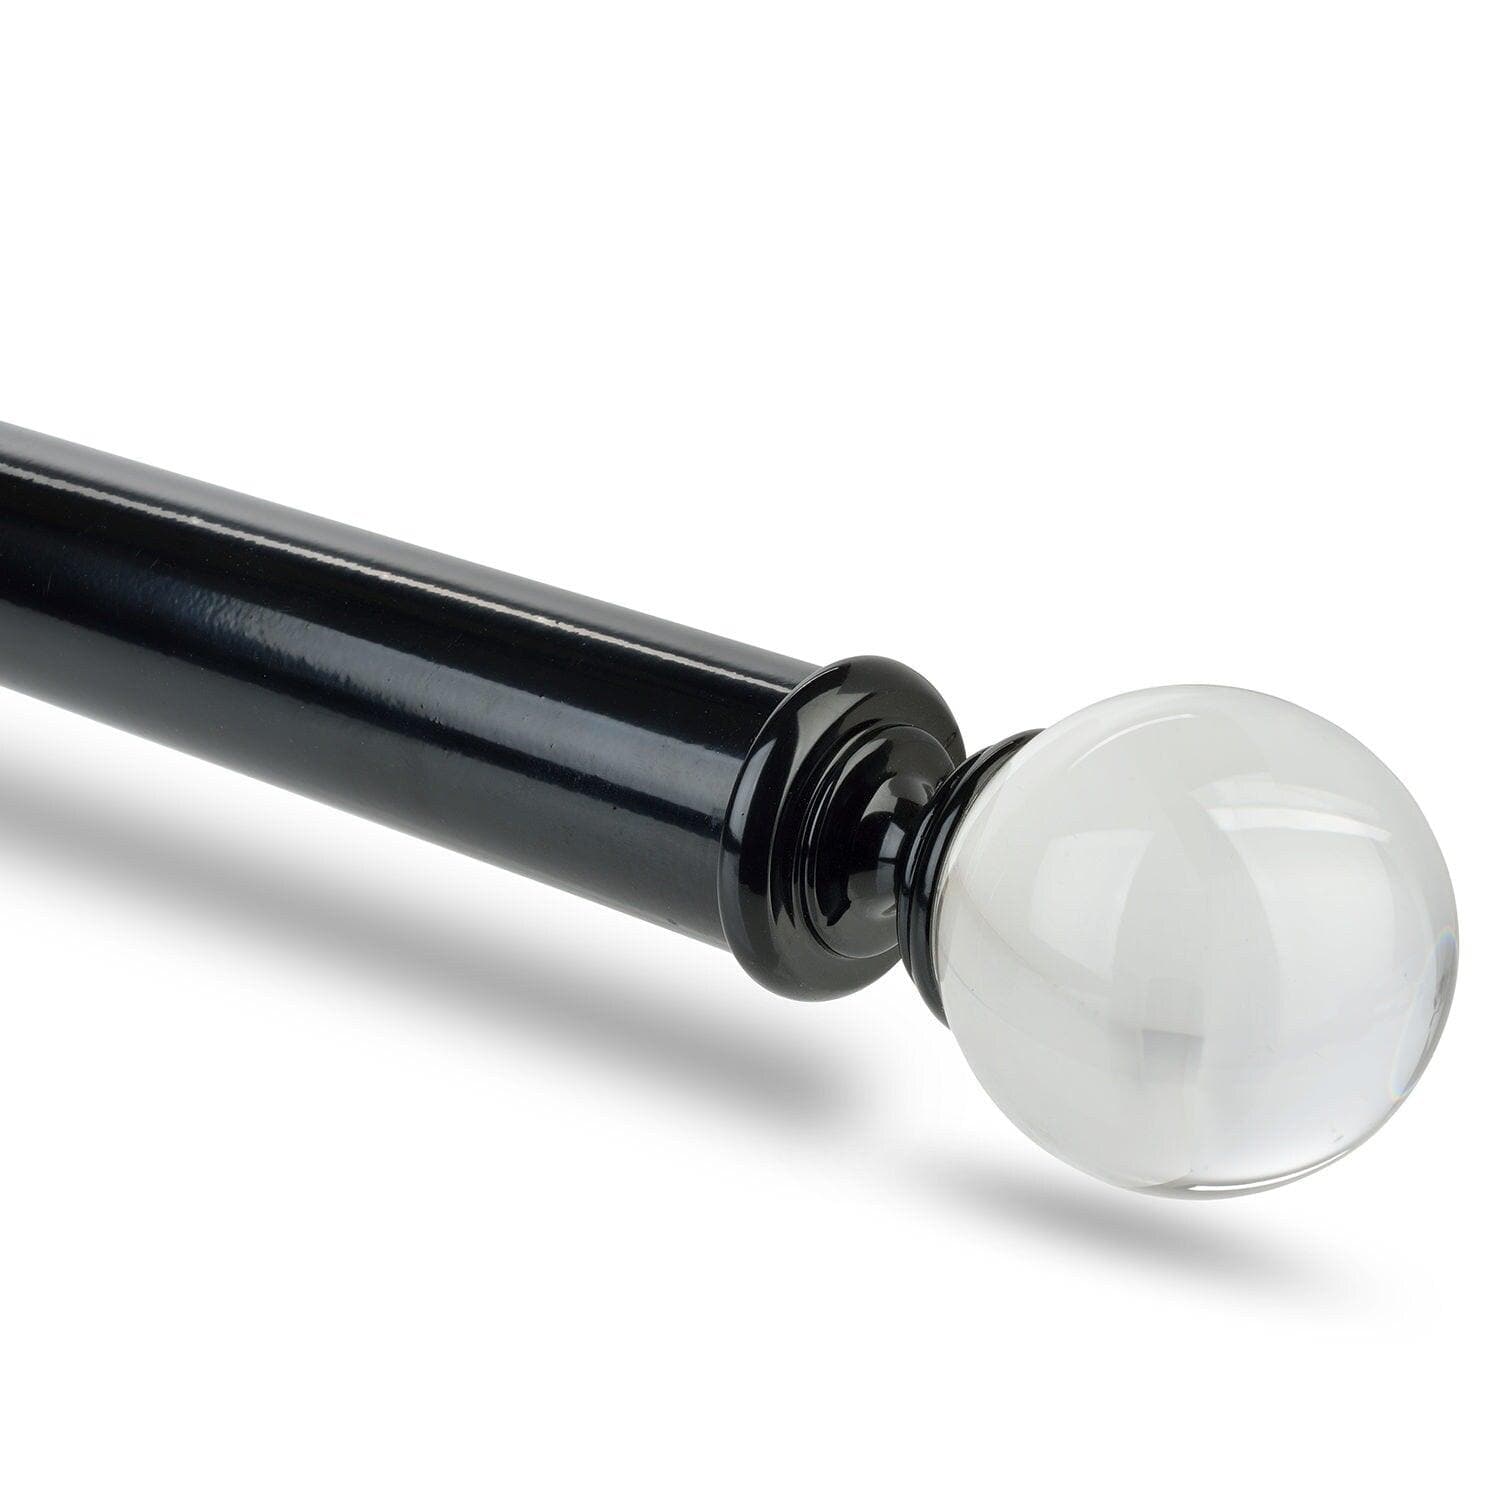 Glass Ball Gloss Black Extendable Metal Rod Set